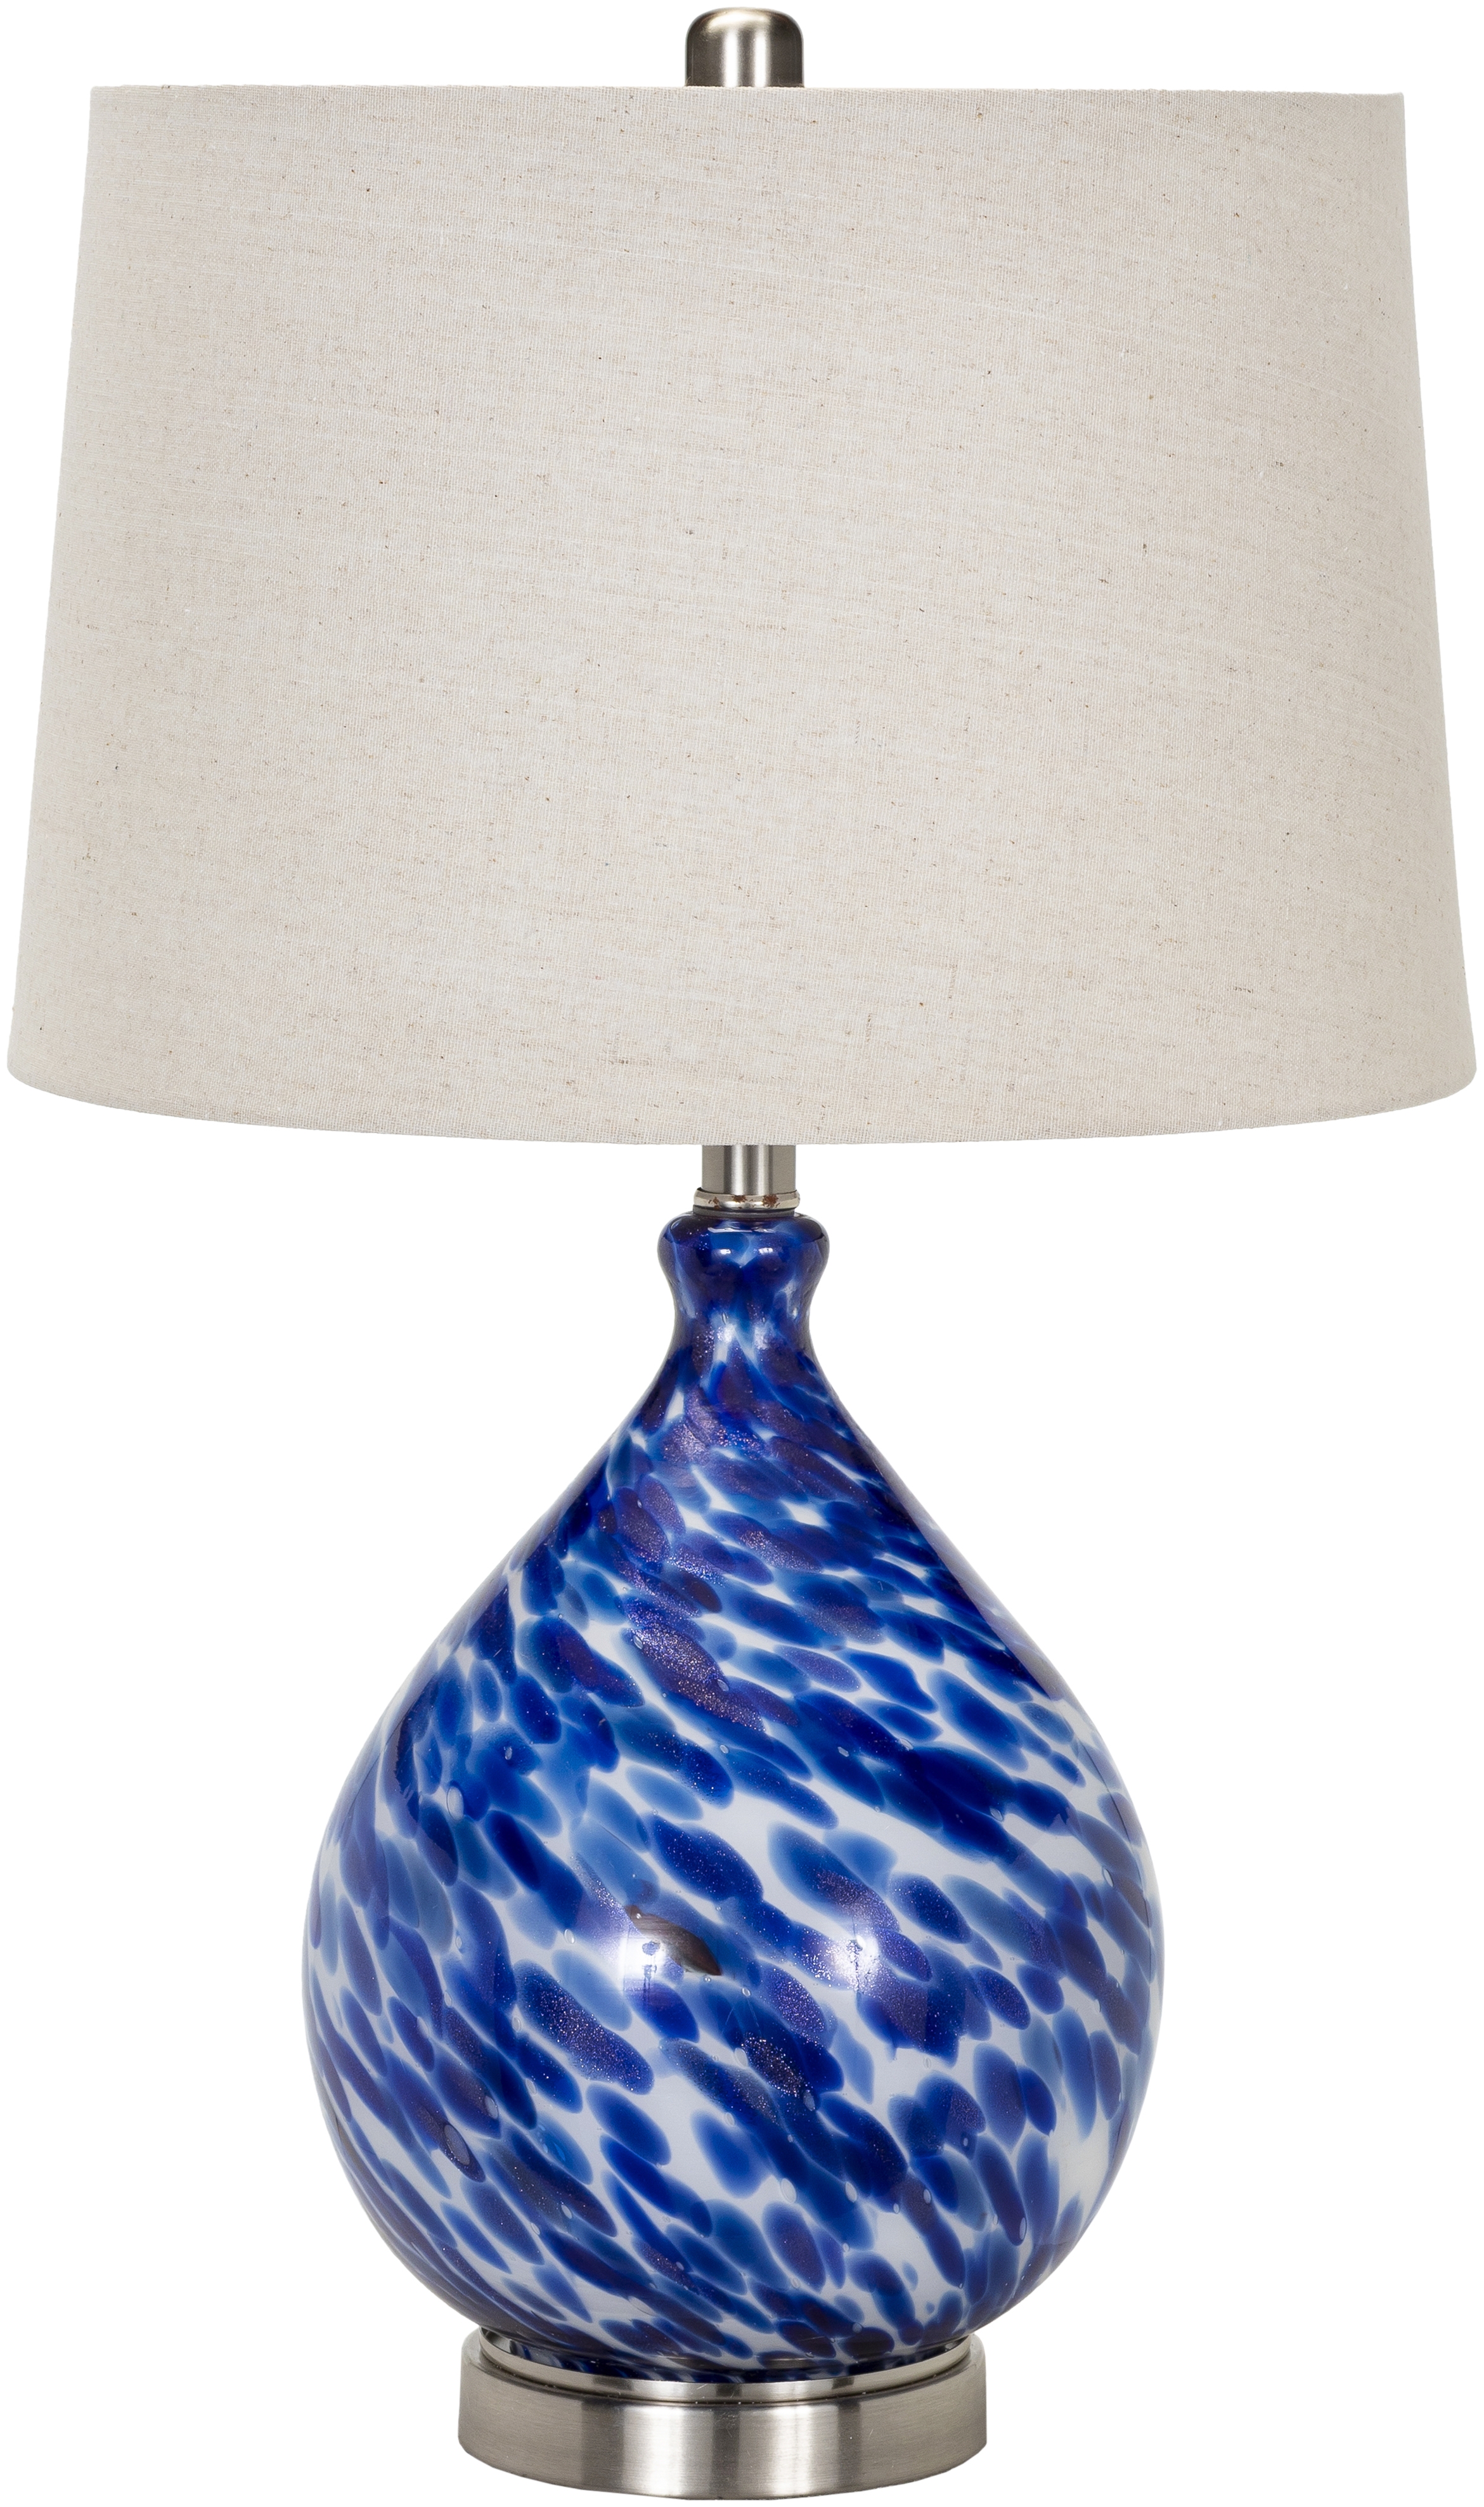 Cascais Table Lamp - Image 0